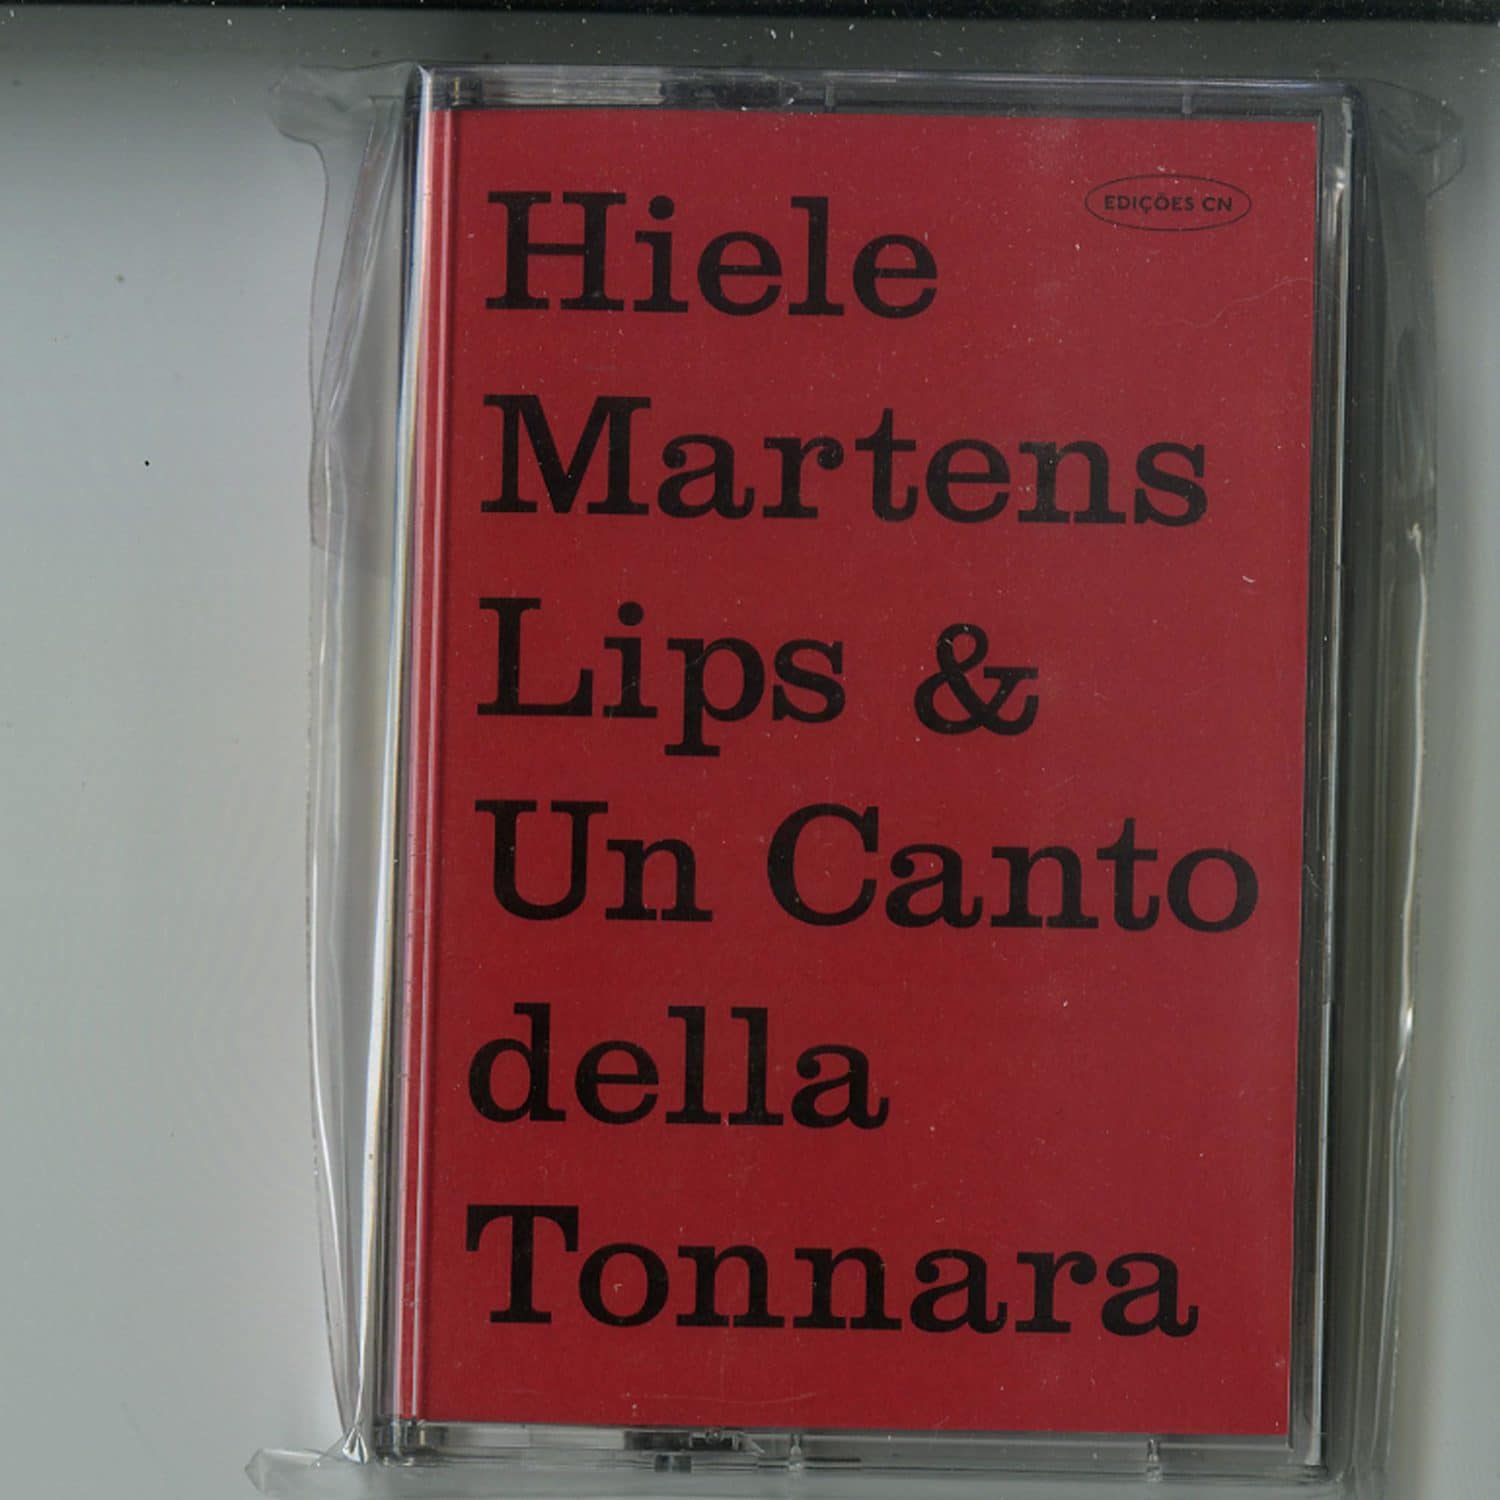 Hiele Martens - LIPS & UN CANTO DELLA TONNARA 